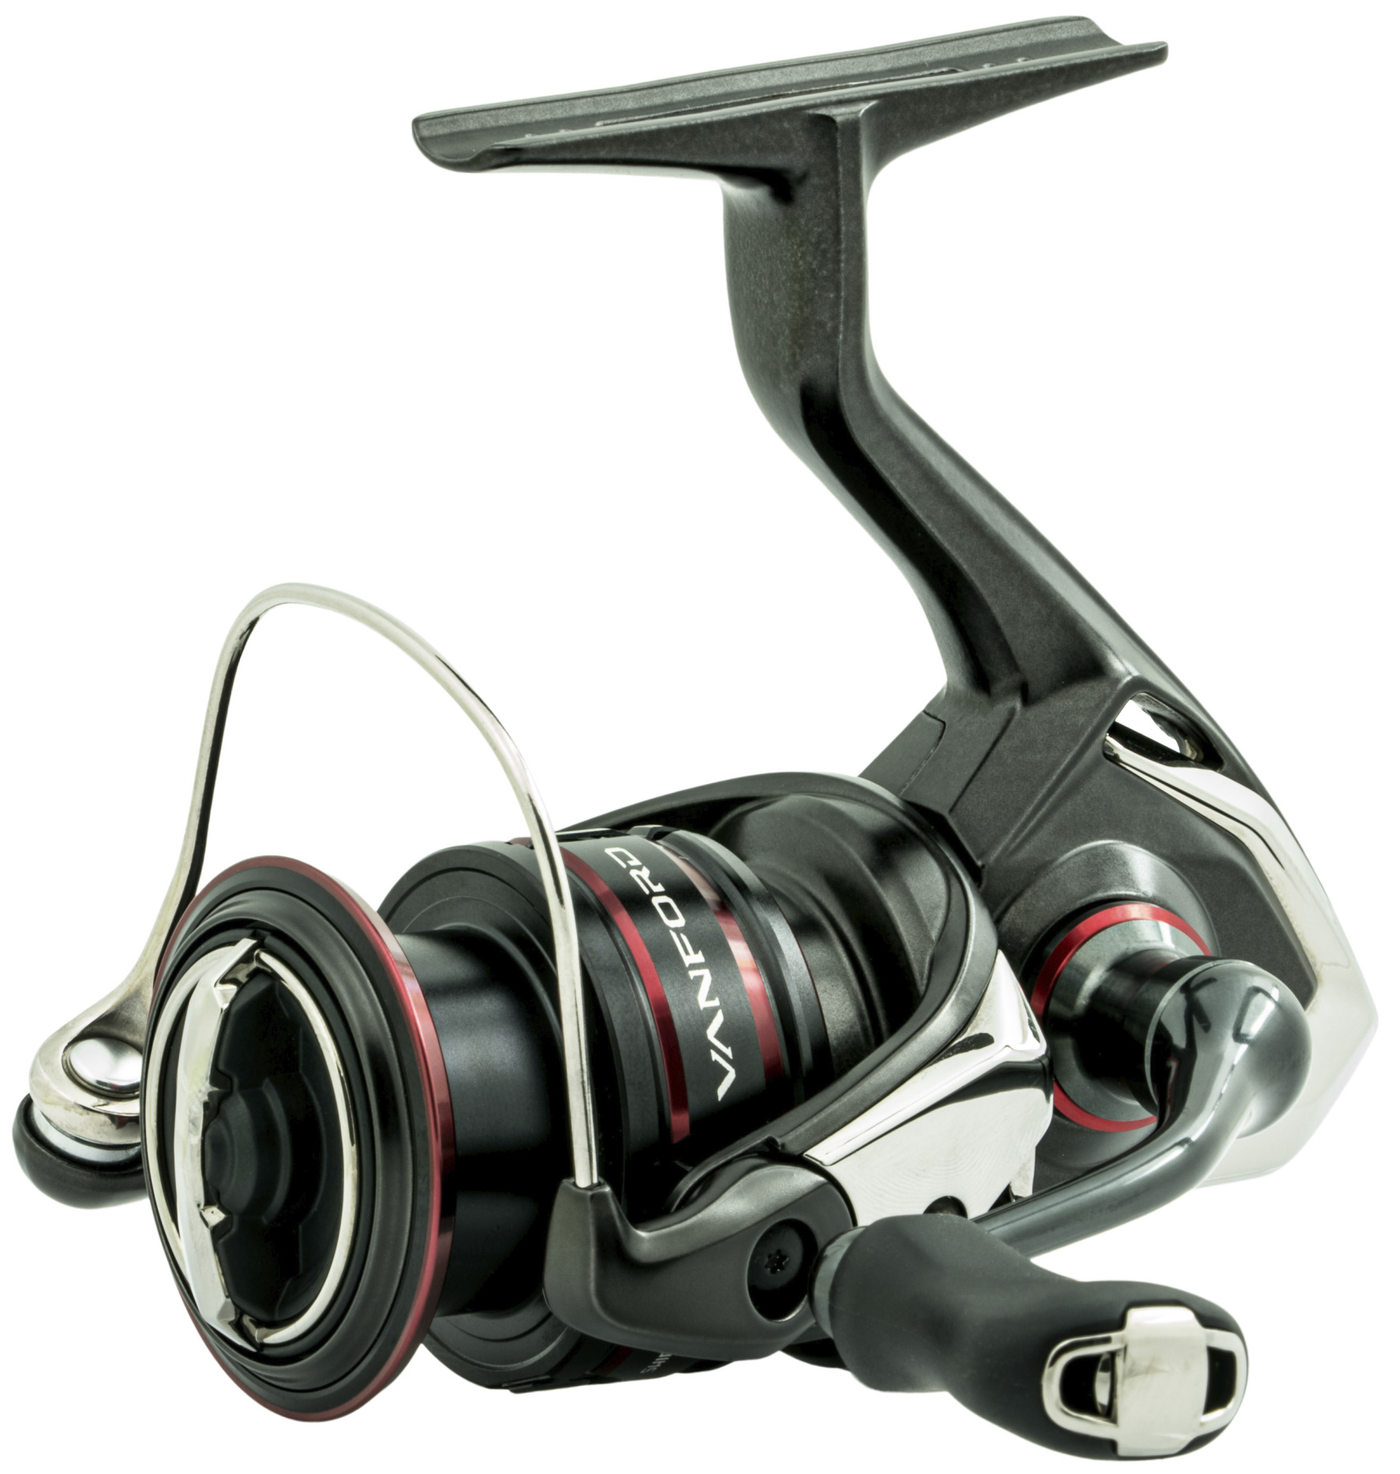 Shimano Reel - Tackle+Marine sports fishing accessories